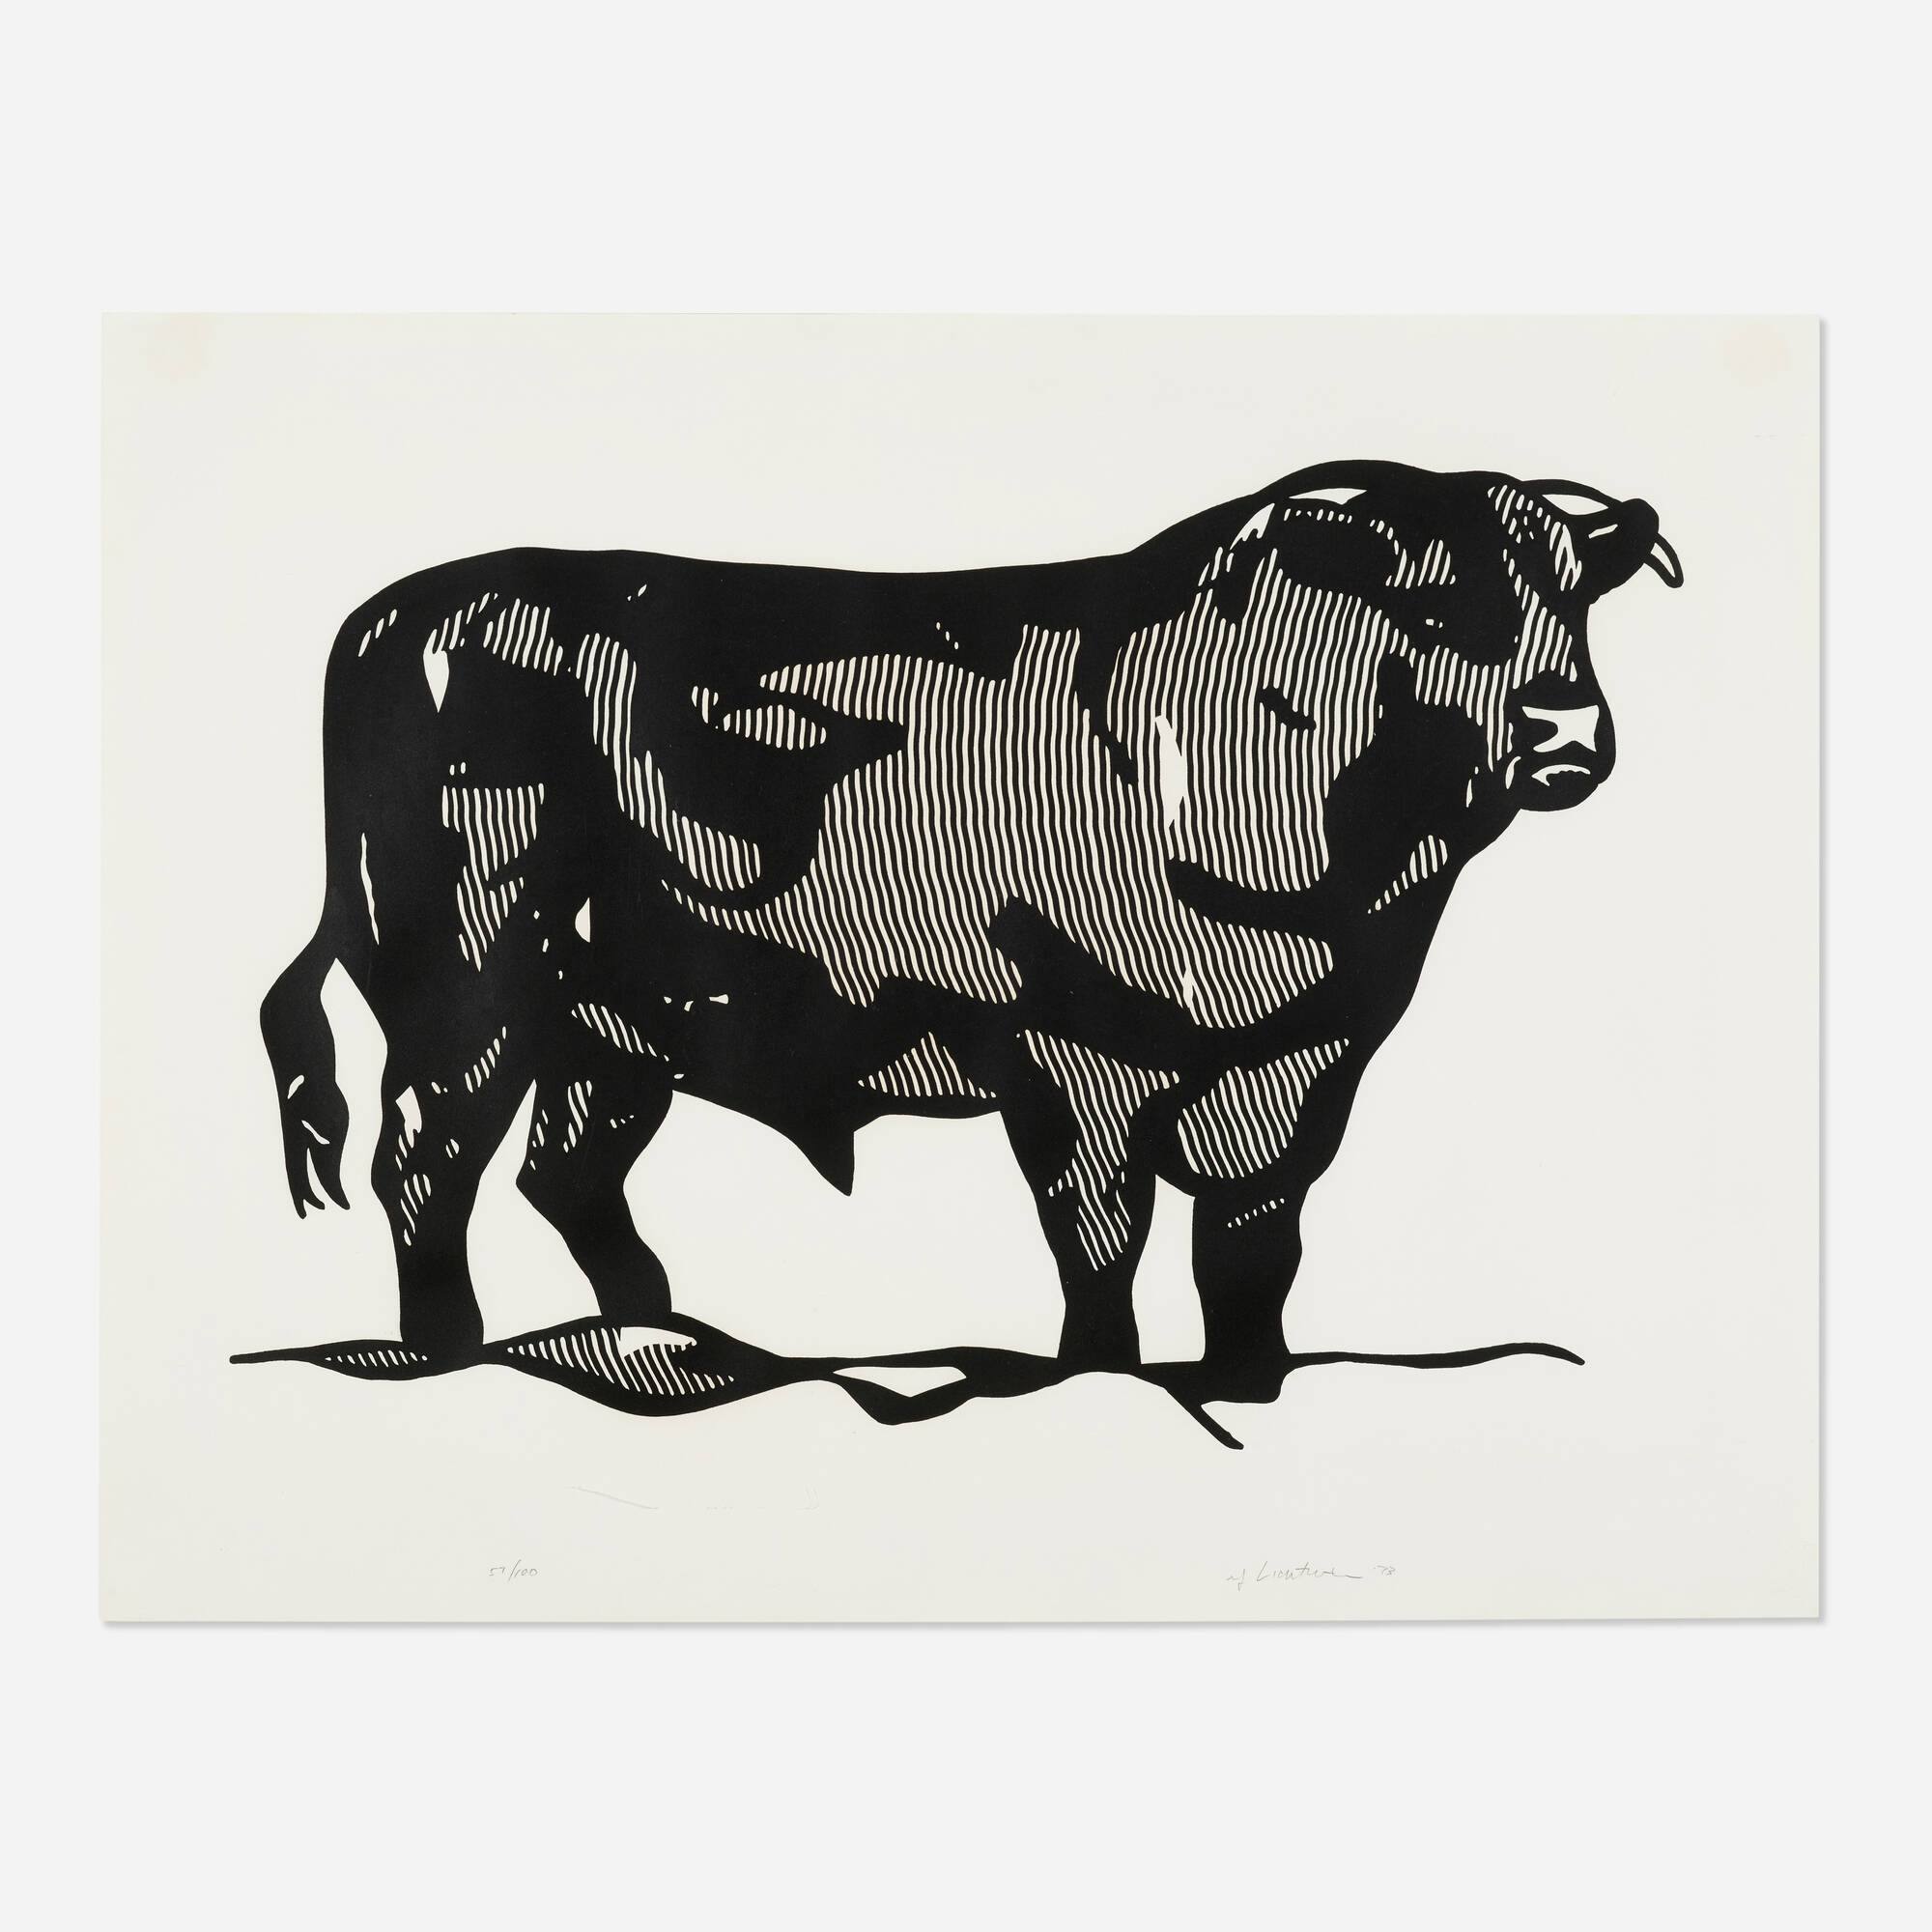 Bull 1 (from Bull Profile series)